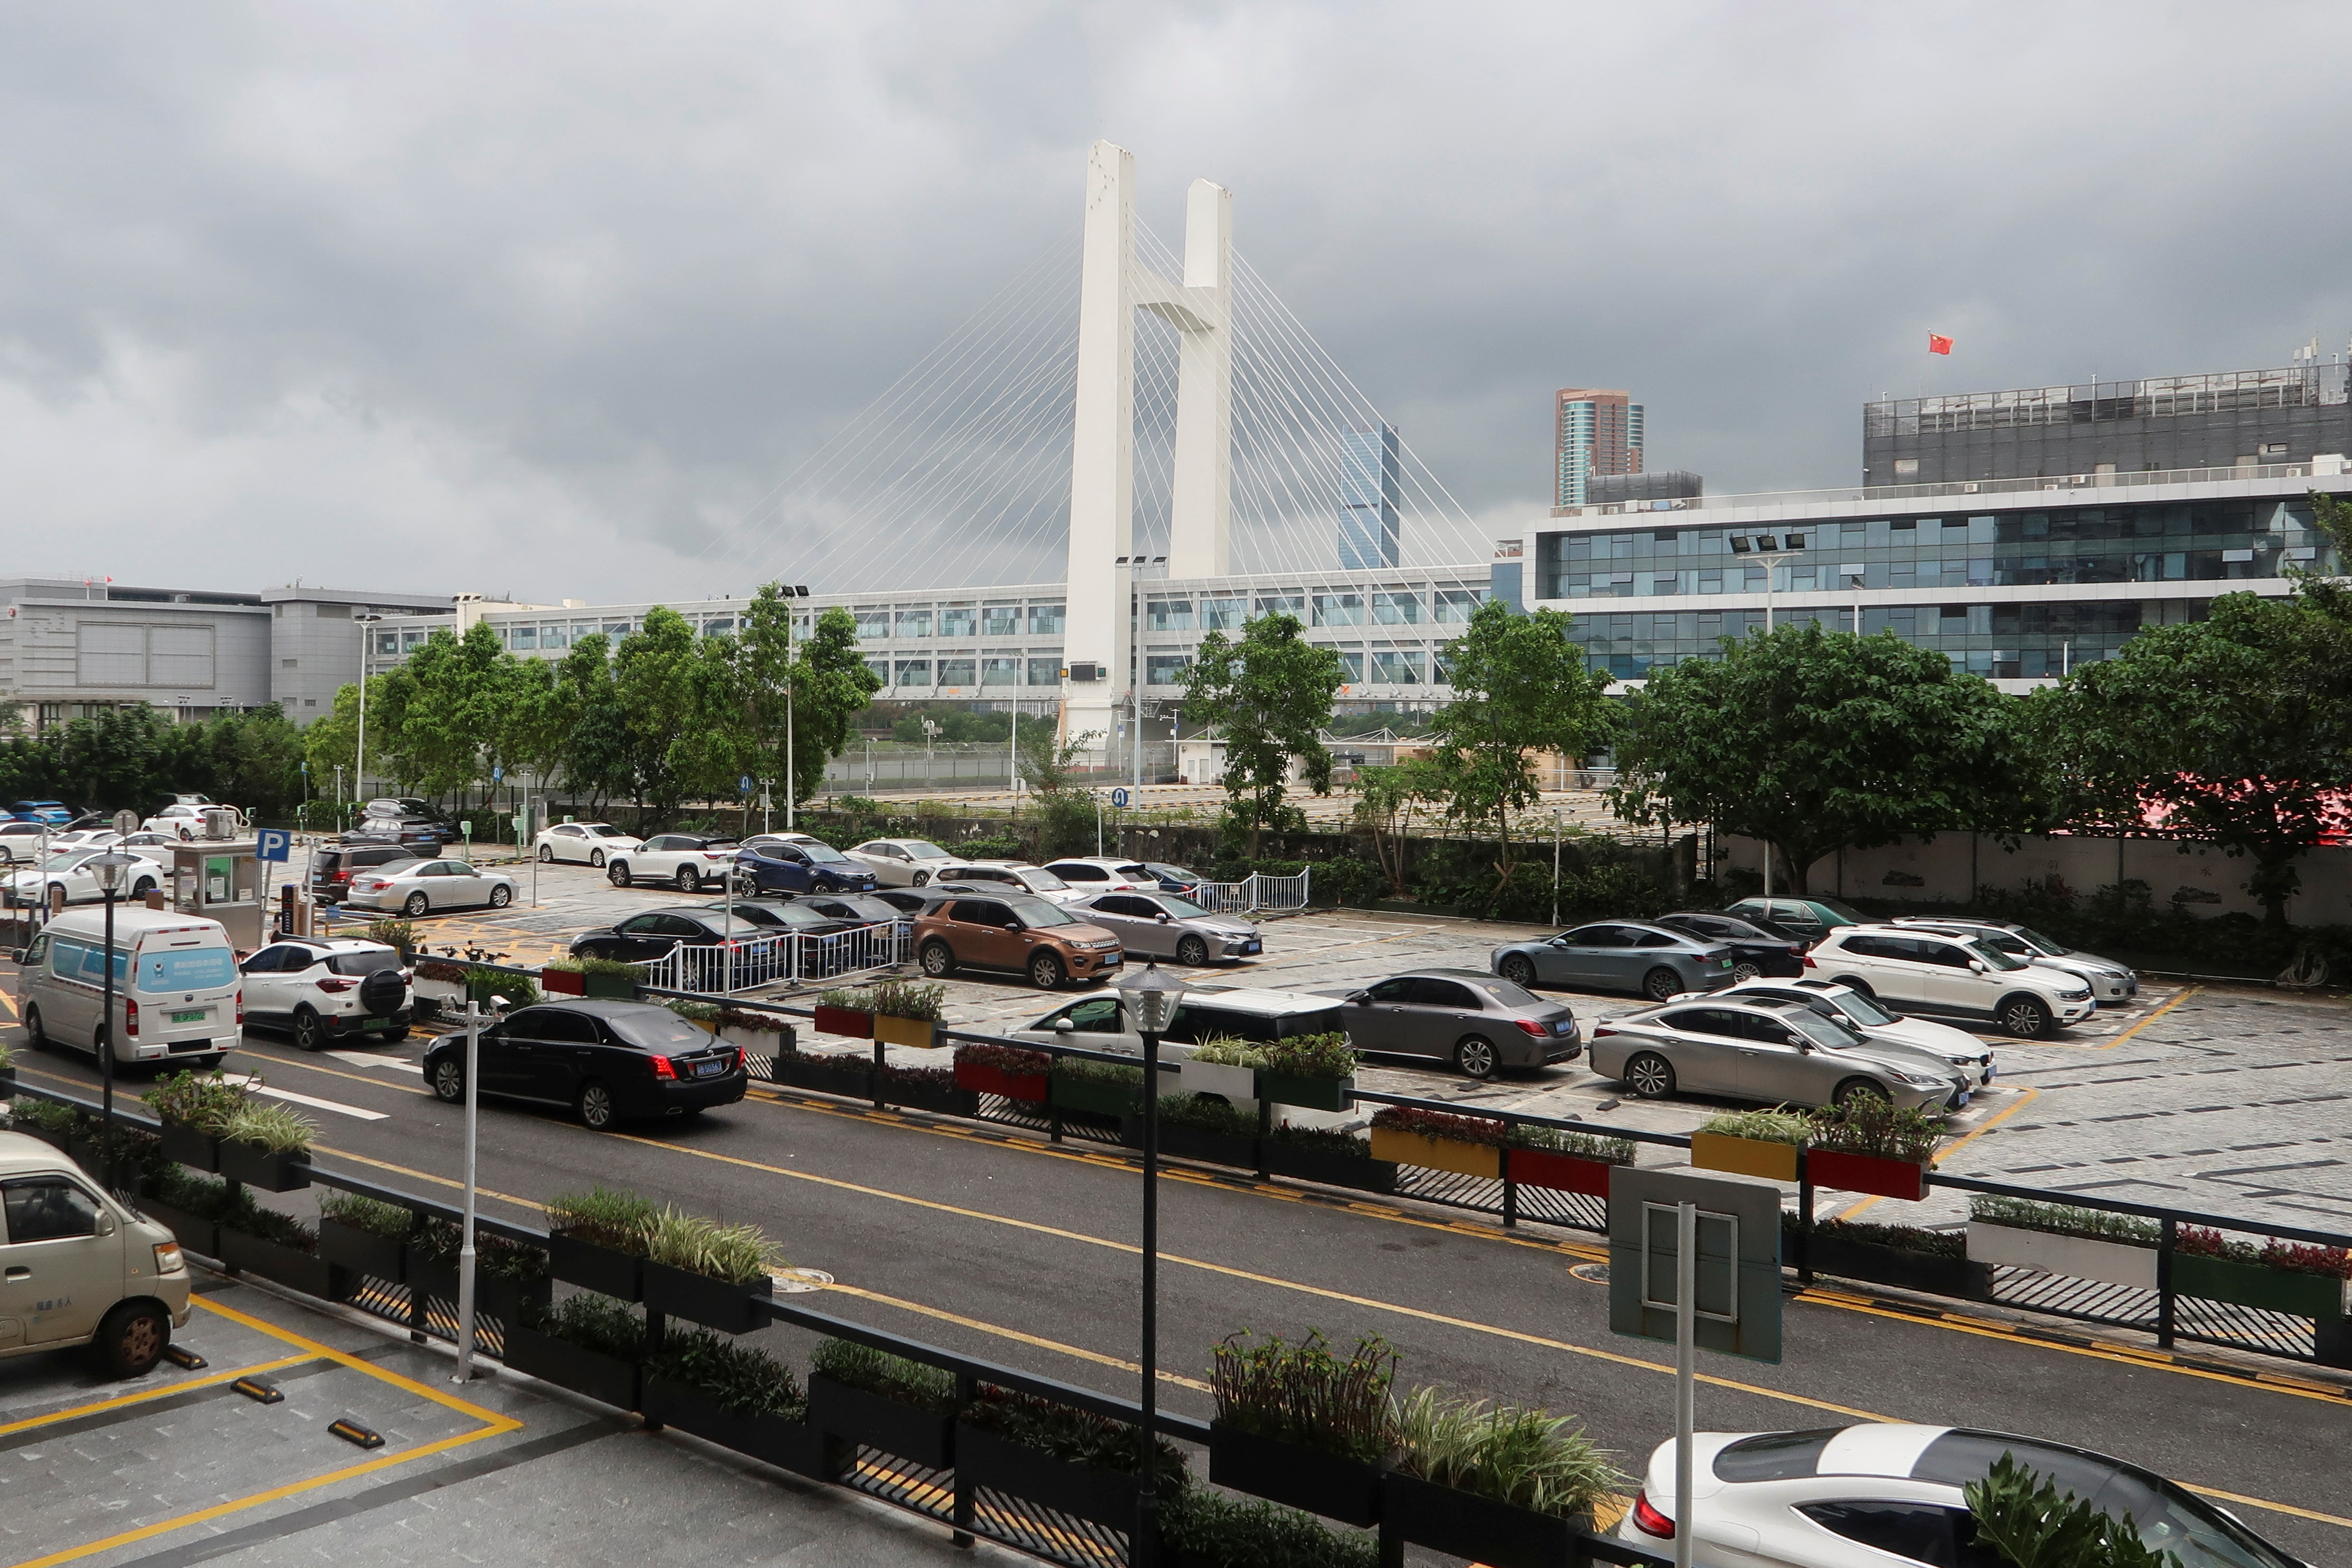 Cars park beside Futian Checkpoint in Shenzhen